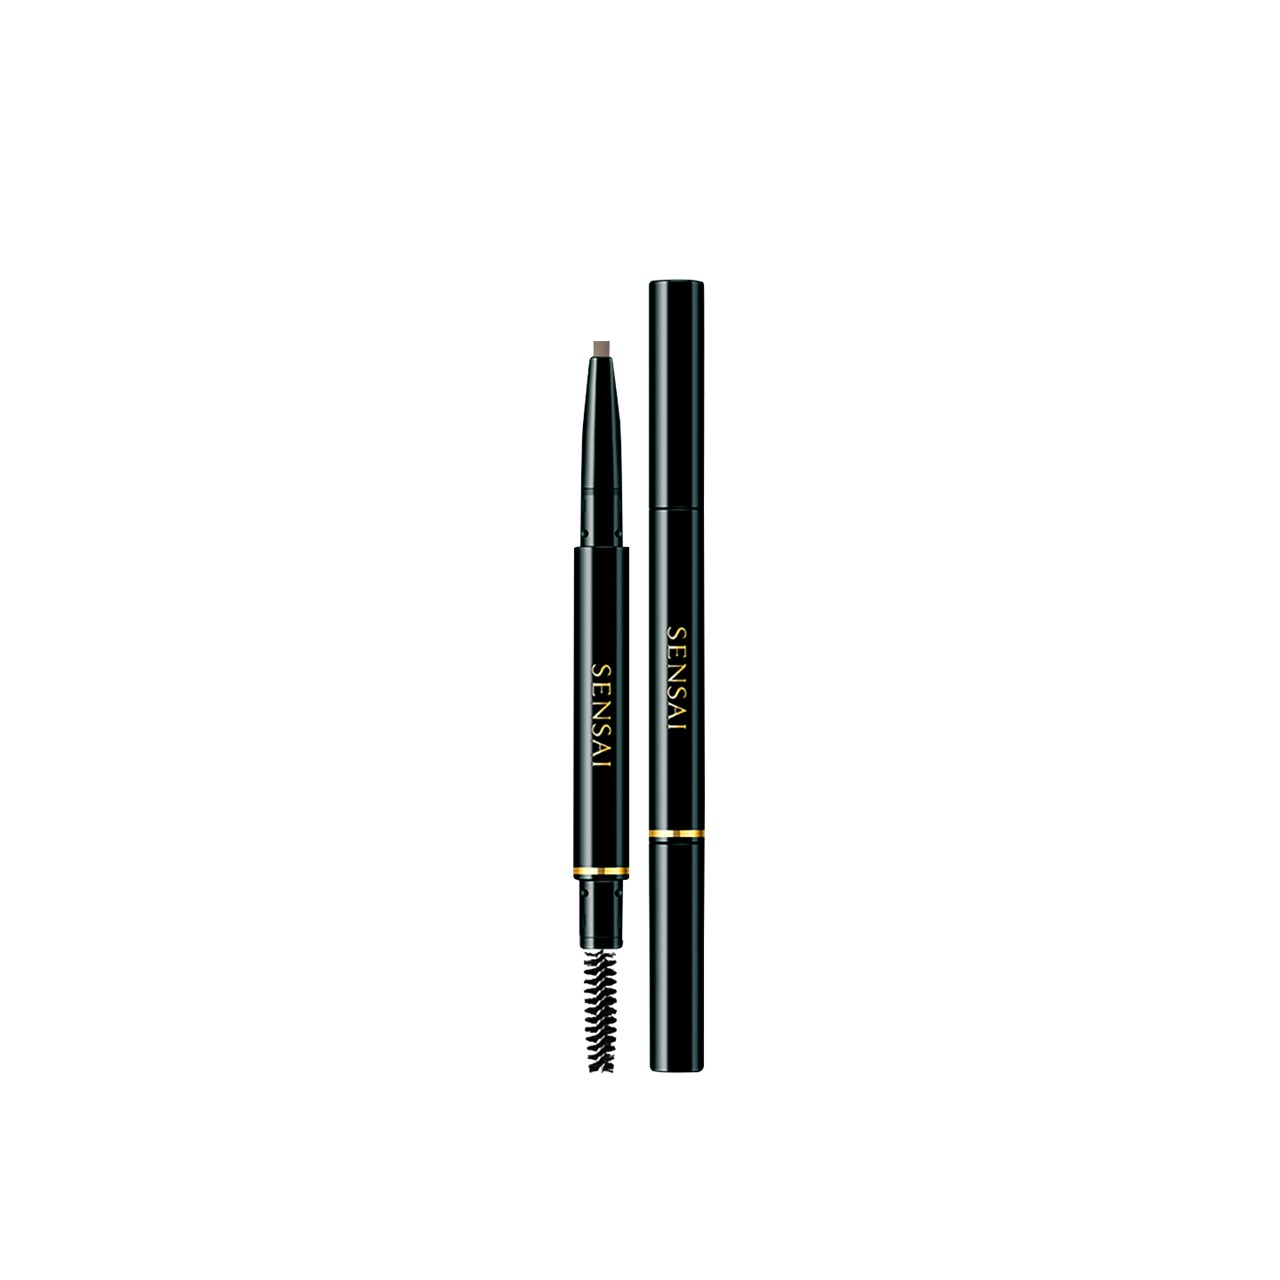 SENSAI Styling Eyebrow Pencil 03 Taupe Brown 0.2g